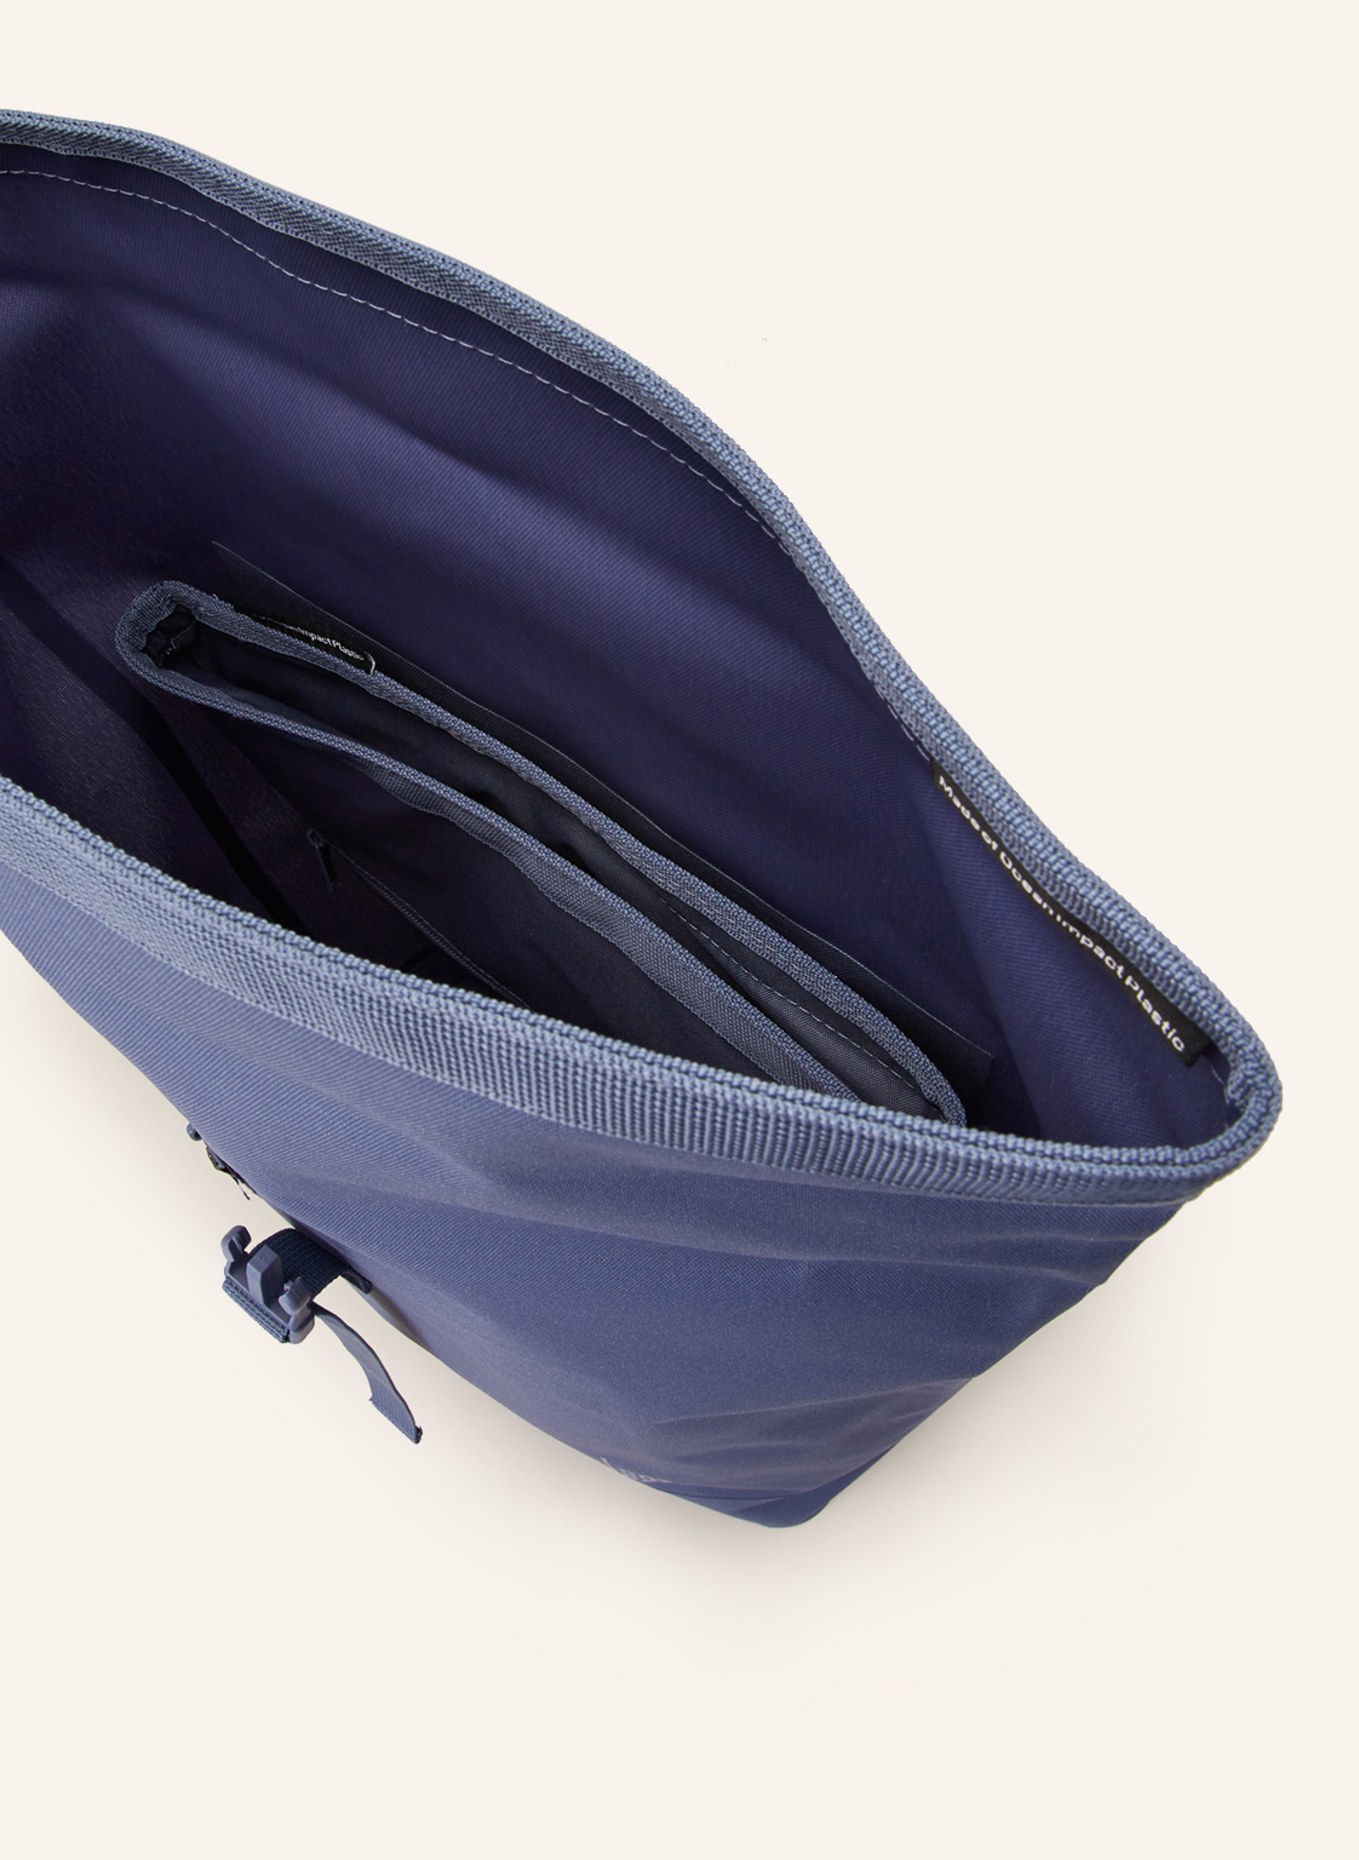 GOT BAG Backpack 26 l with laptop compartment, Color: BLUE (Image 3)